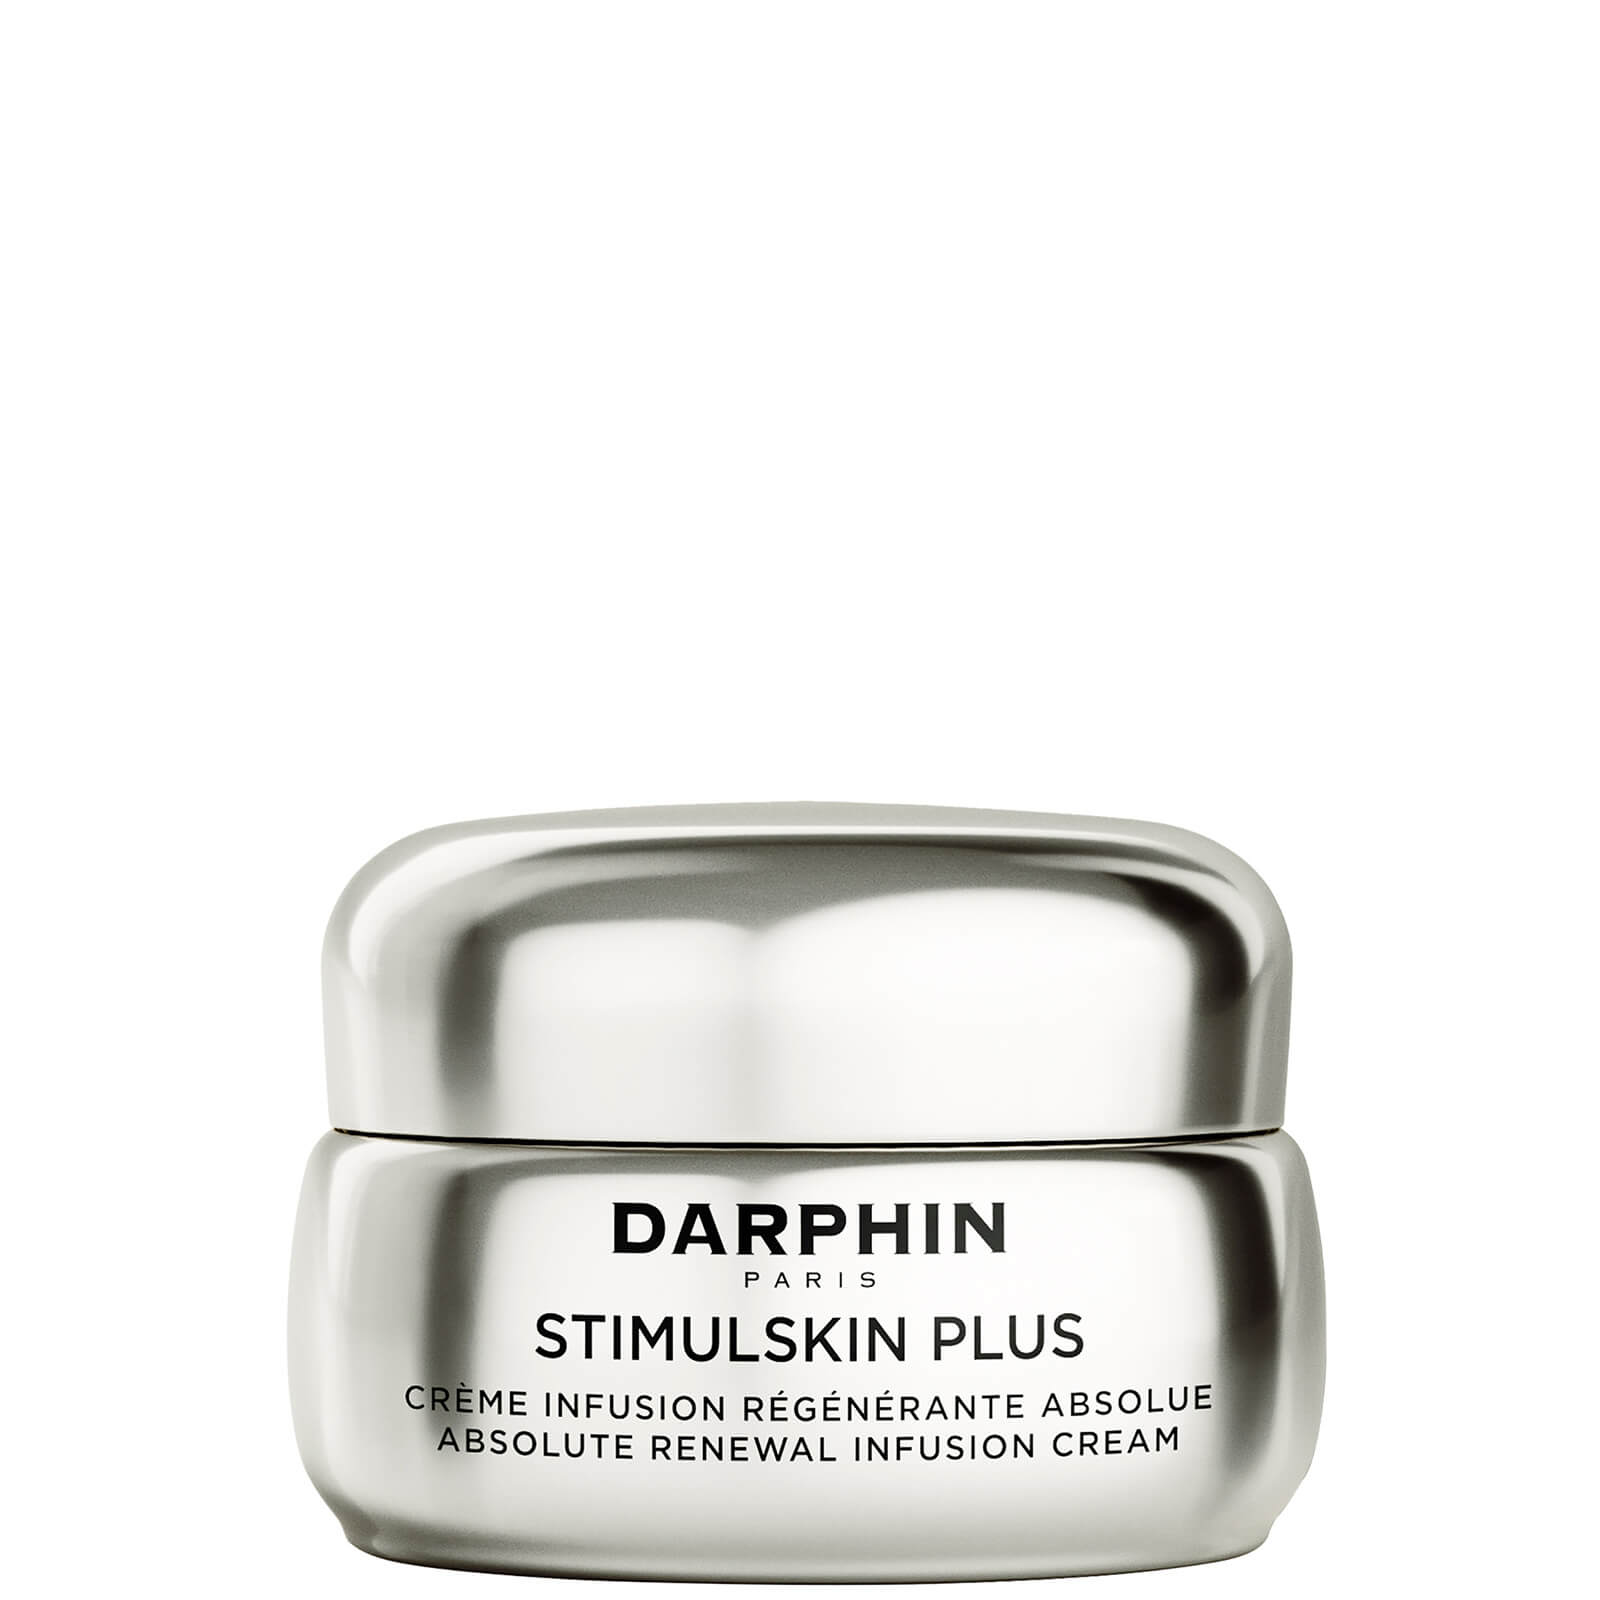 Darphin Mini Absolute Renewal Infusion Cream 15ml